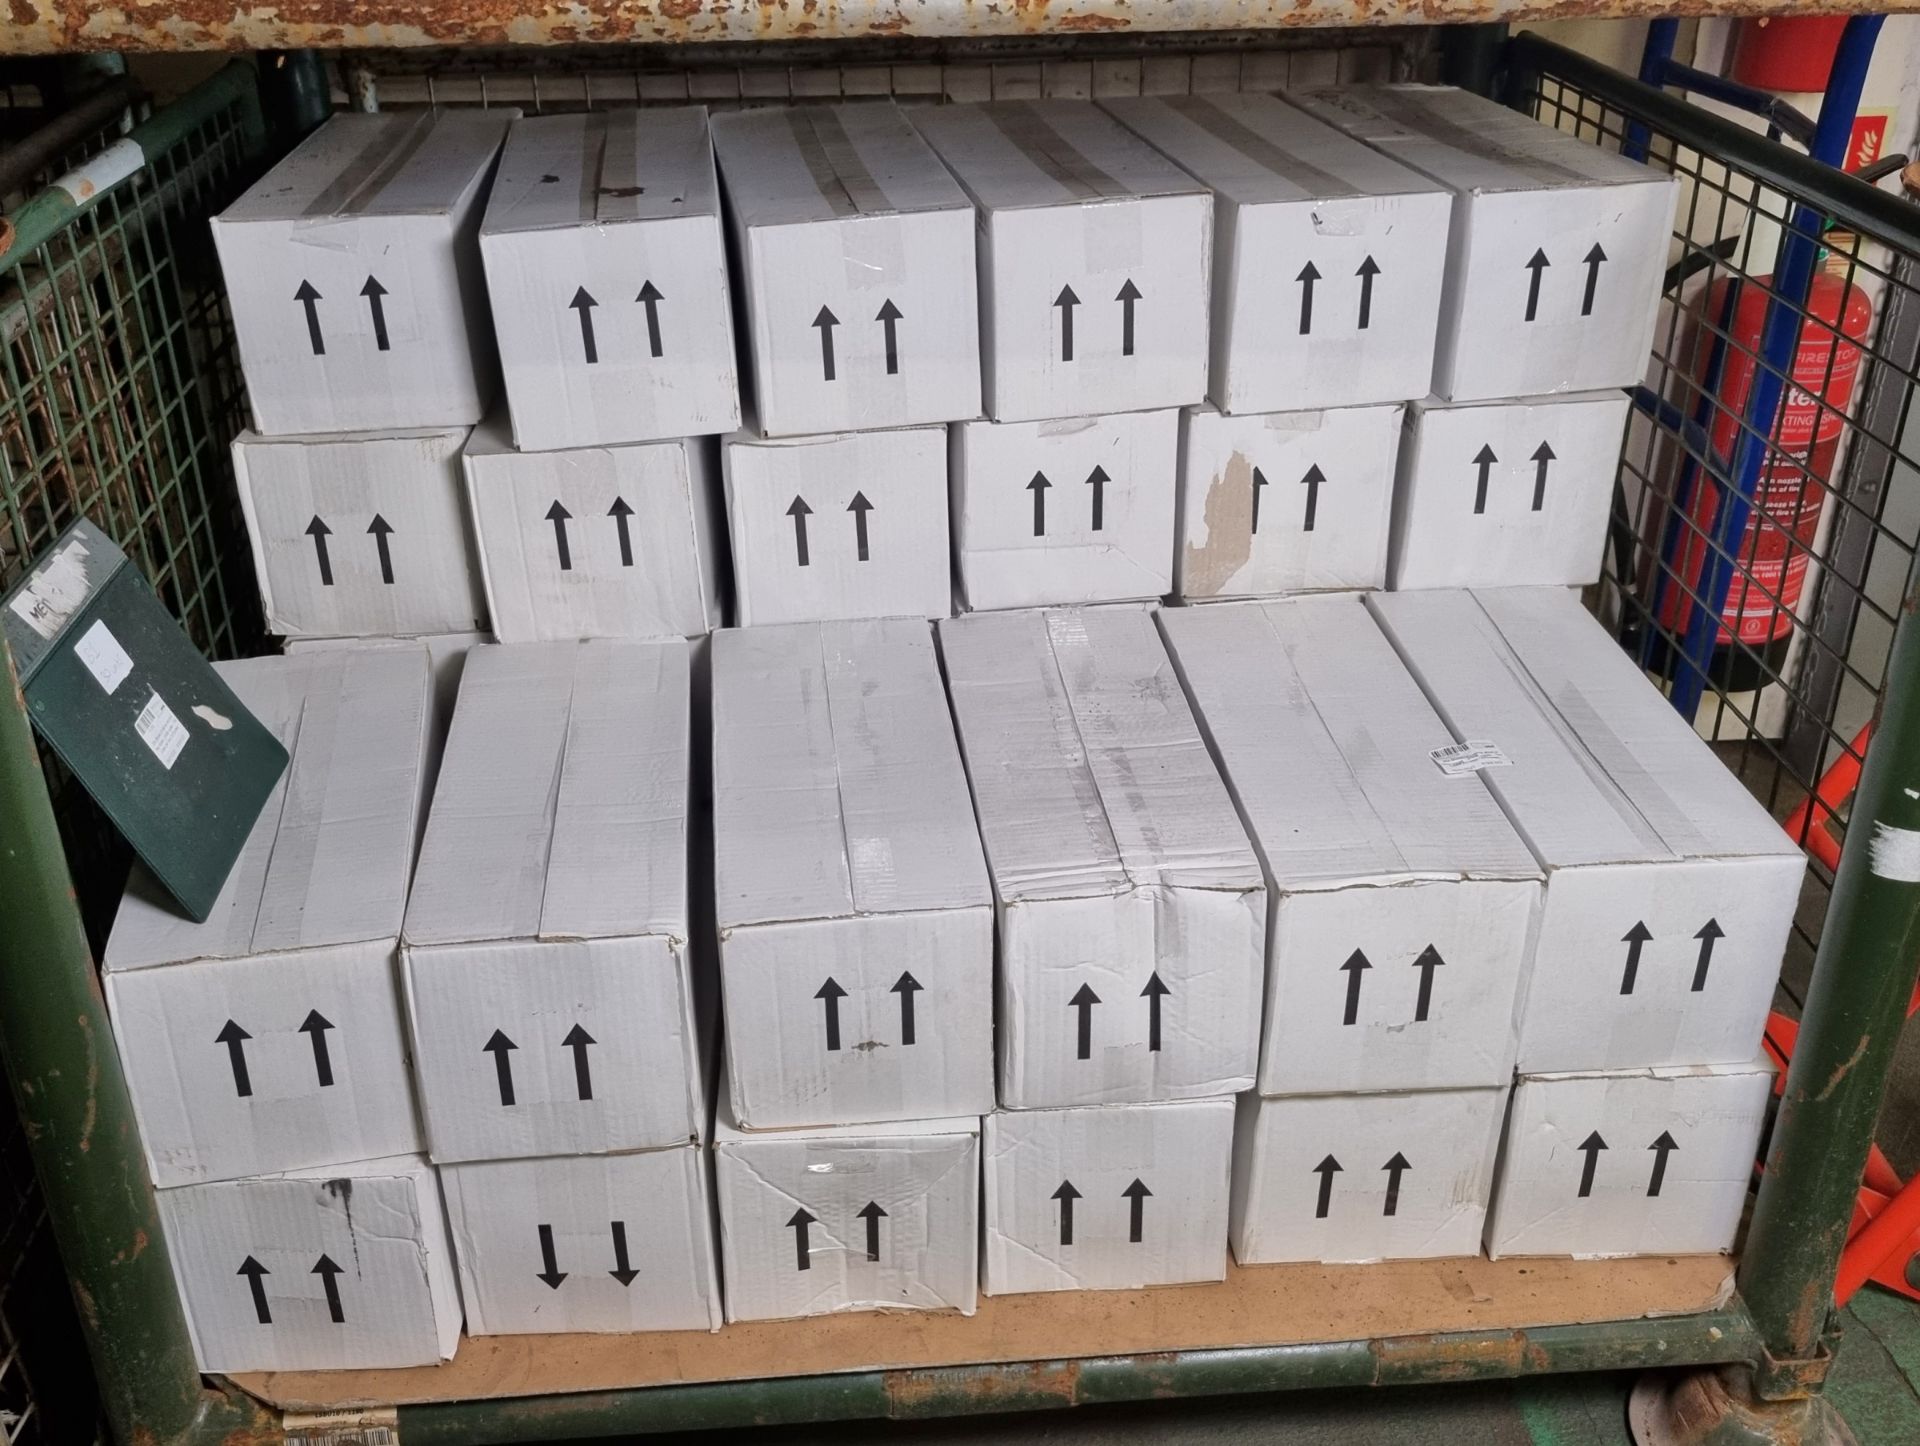 36x Boxes of Henna alcohol free wipes - probe wipes - 10x tubs per box (300 tubs)